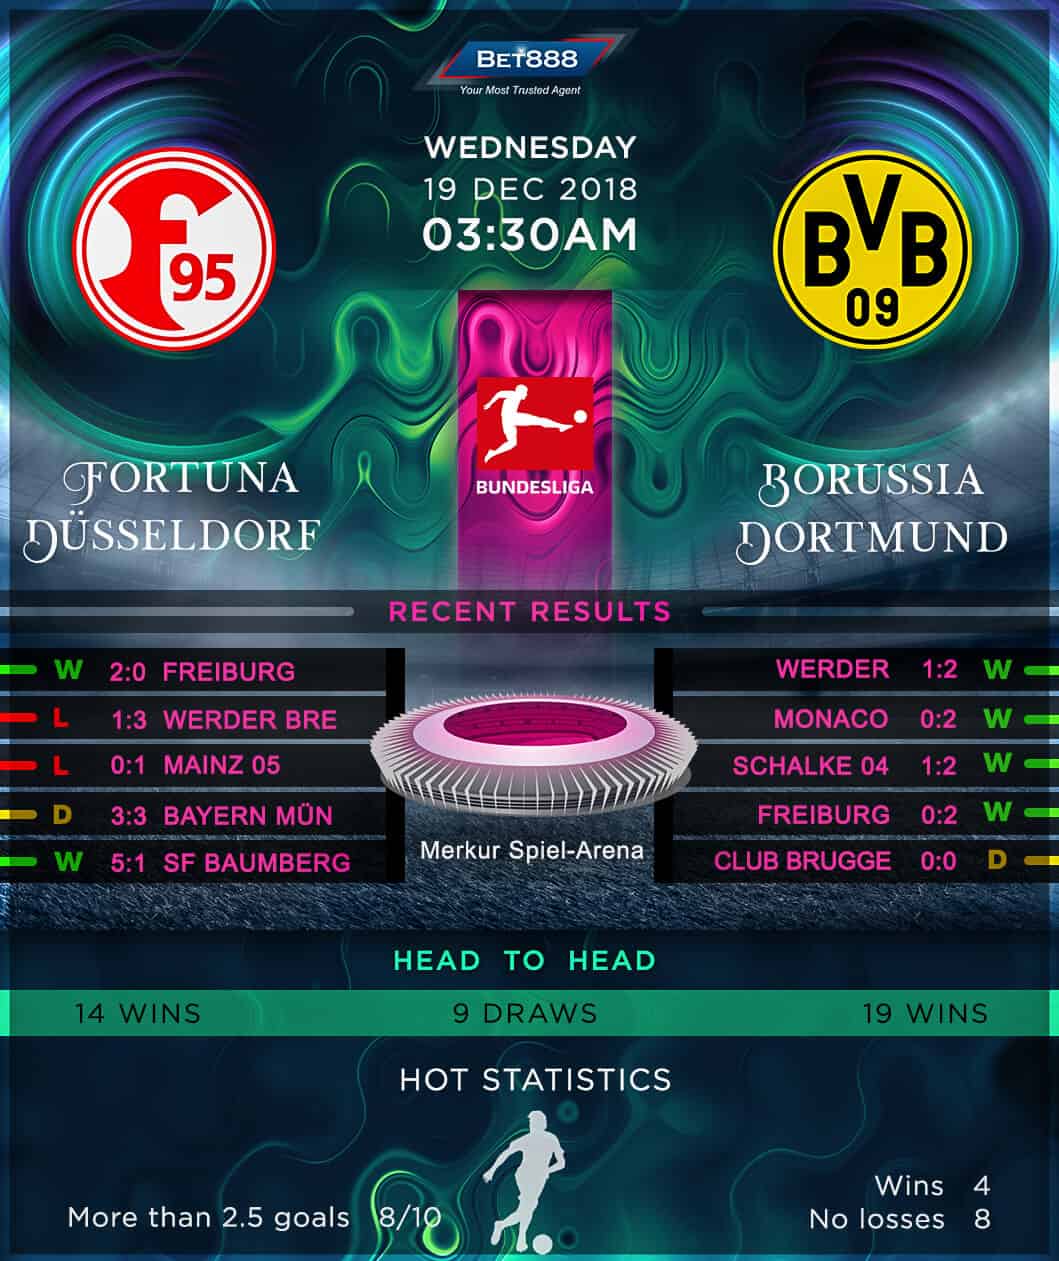 Fortuna Dusseldorf vs Borussia Dortmund 19/12/18